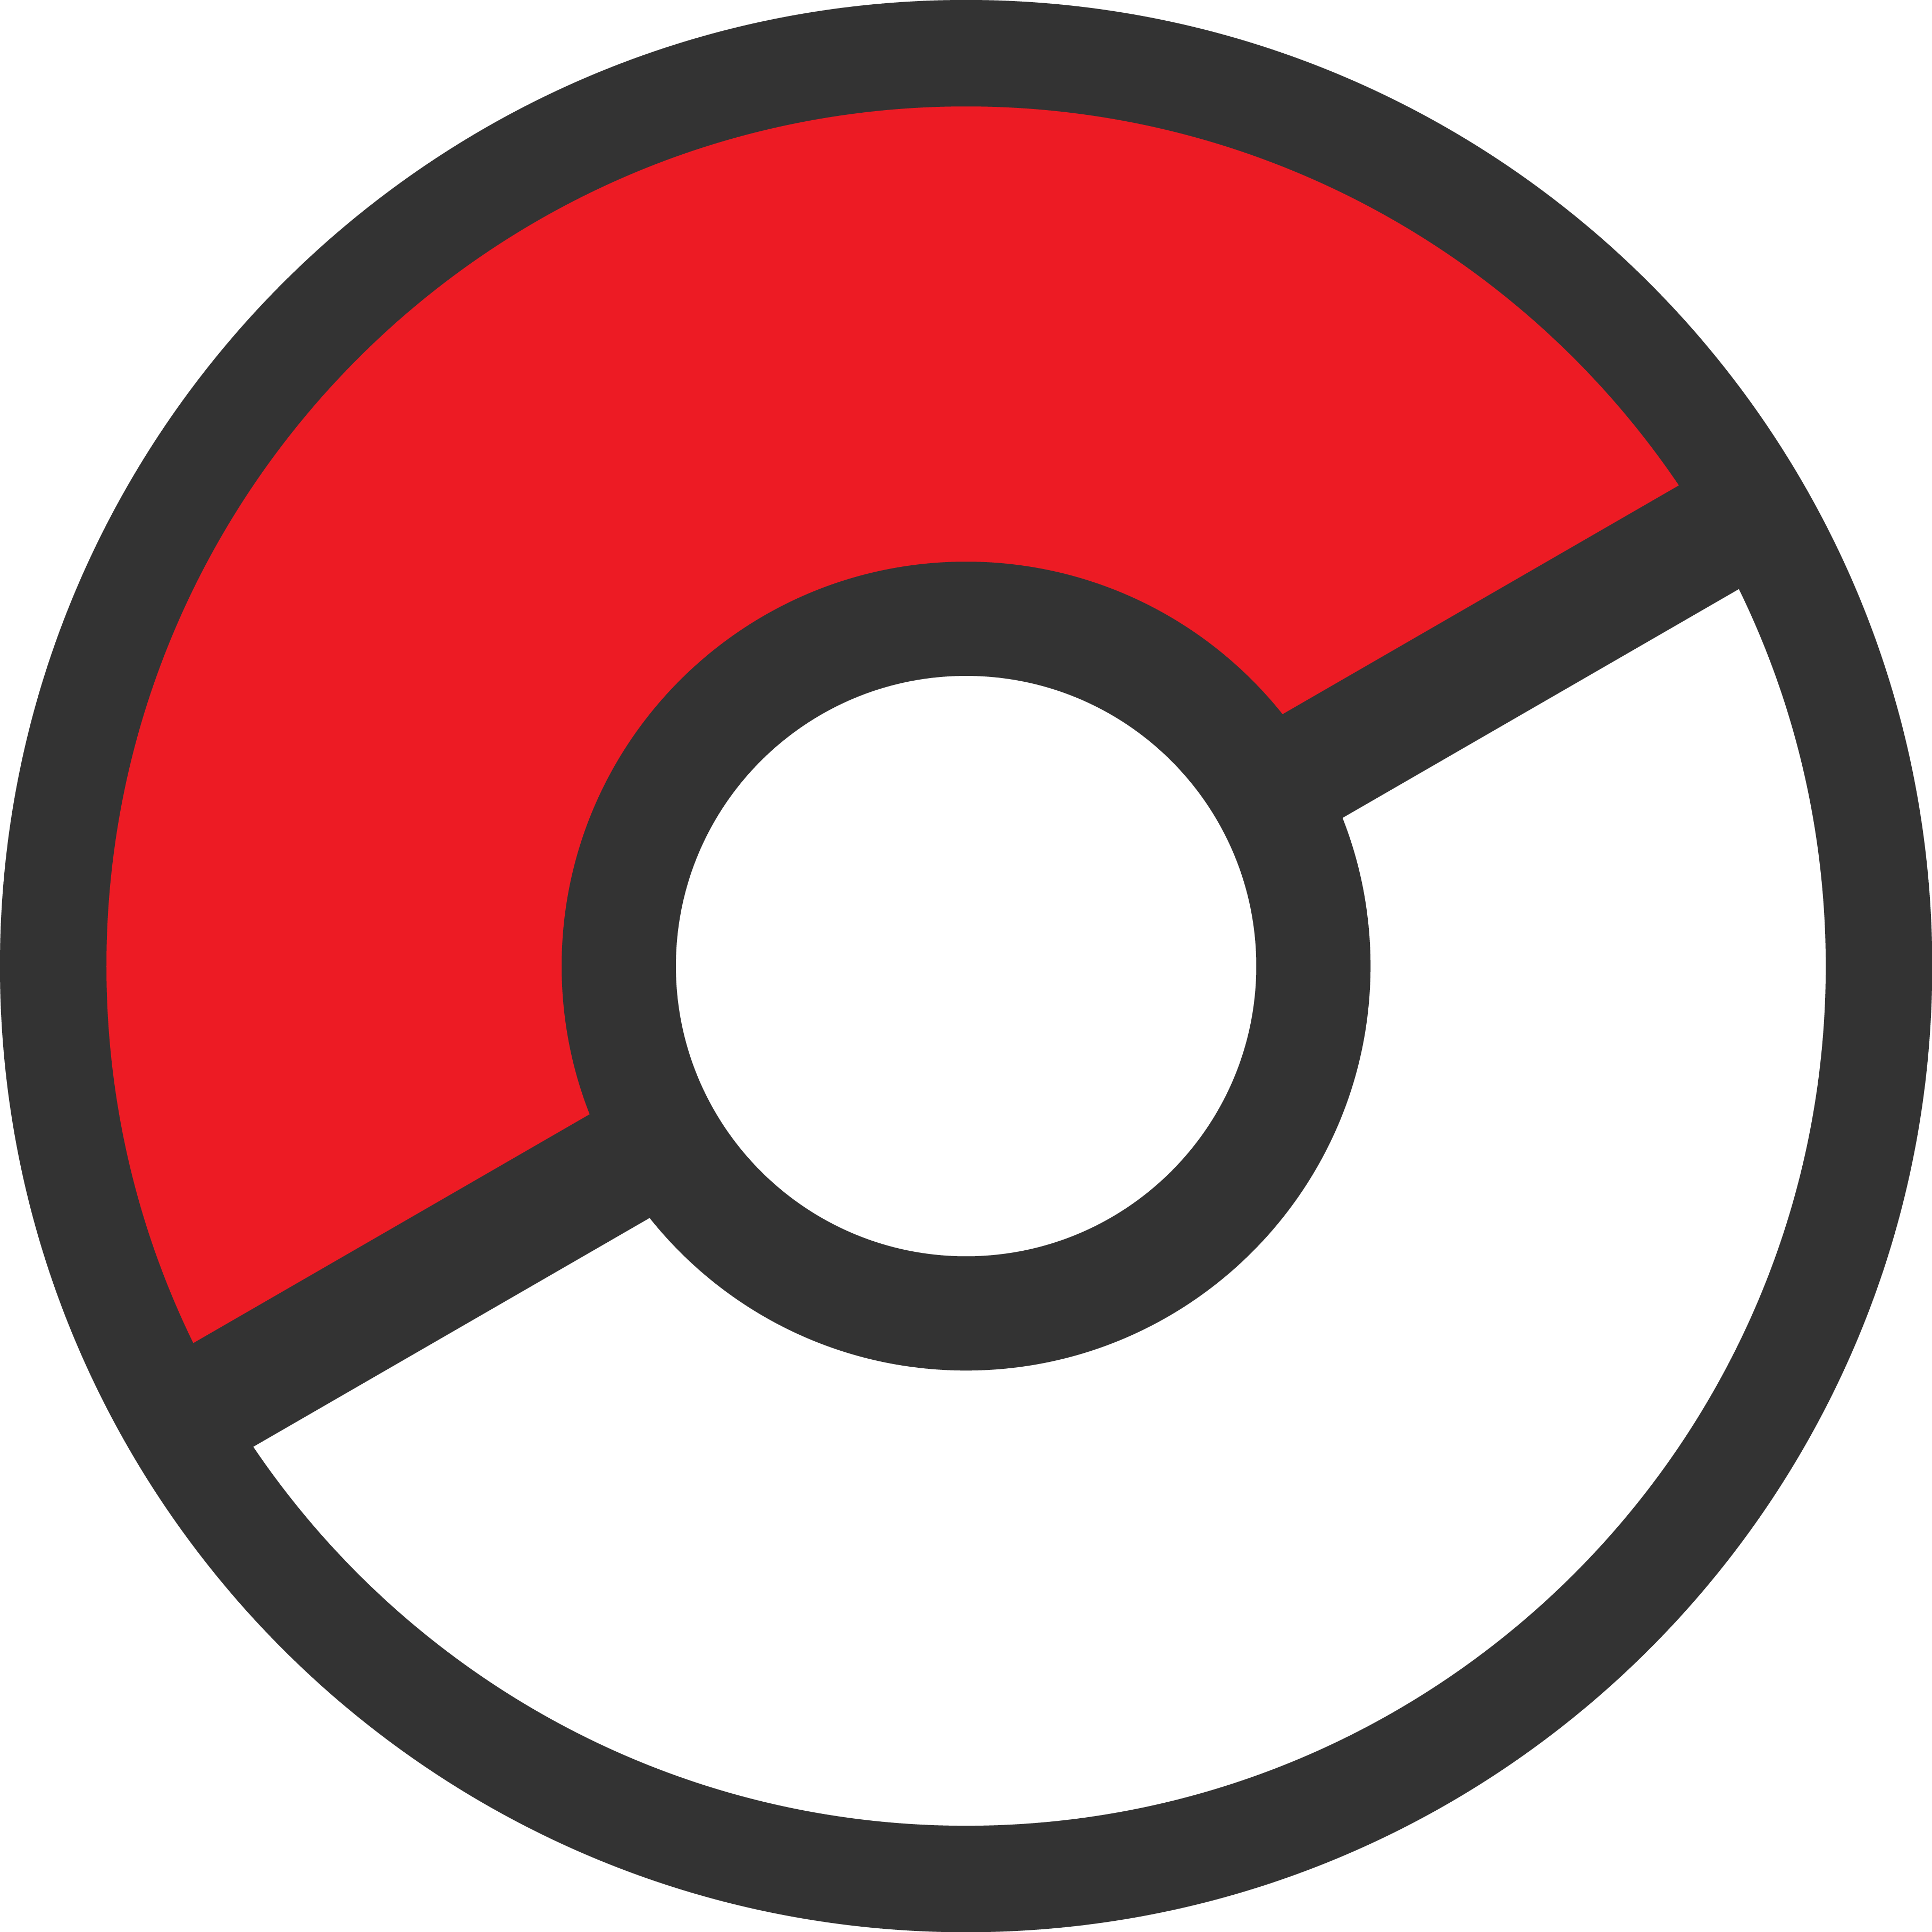 Logotipo Pokemon PNG Transparente - PNG All